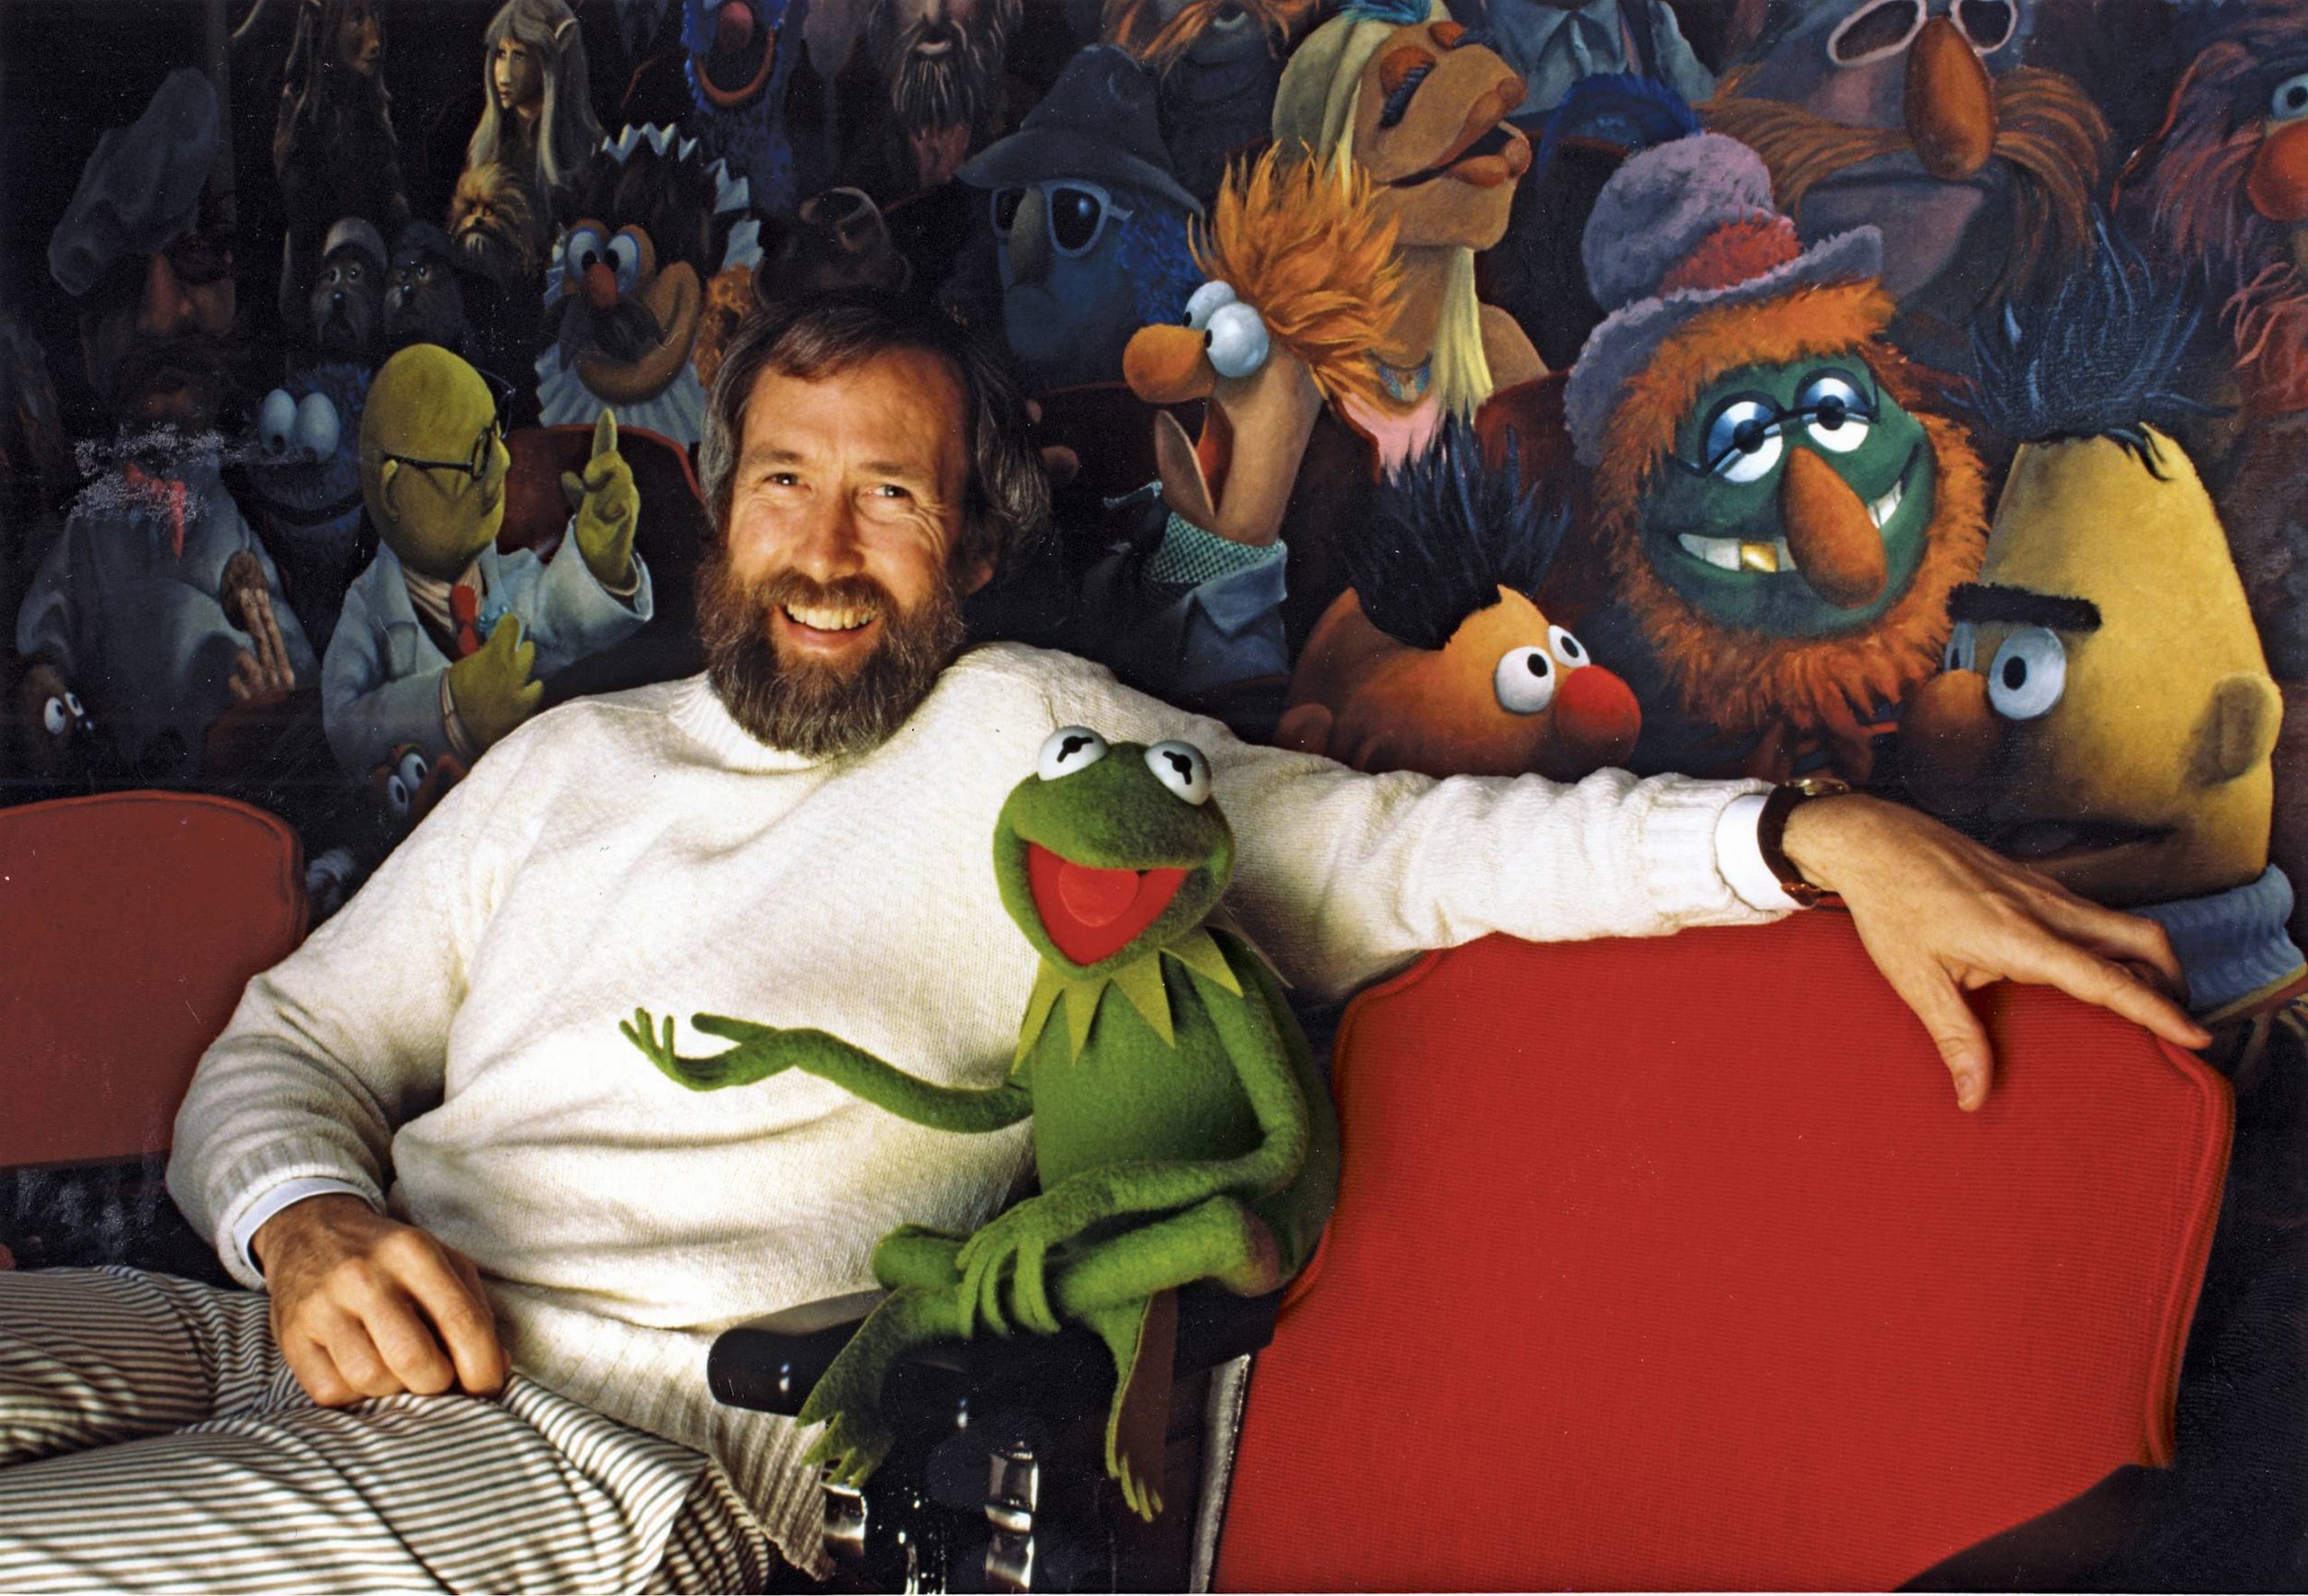 Muppet*Vision 3D: Jim Henson's Final Bow — The Disney Classics